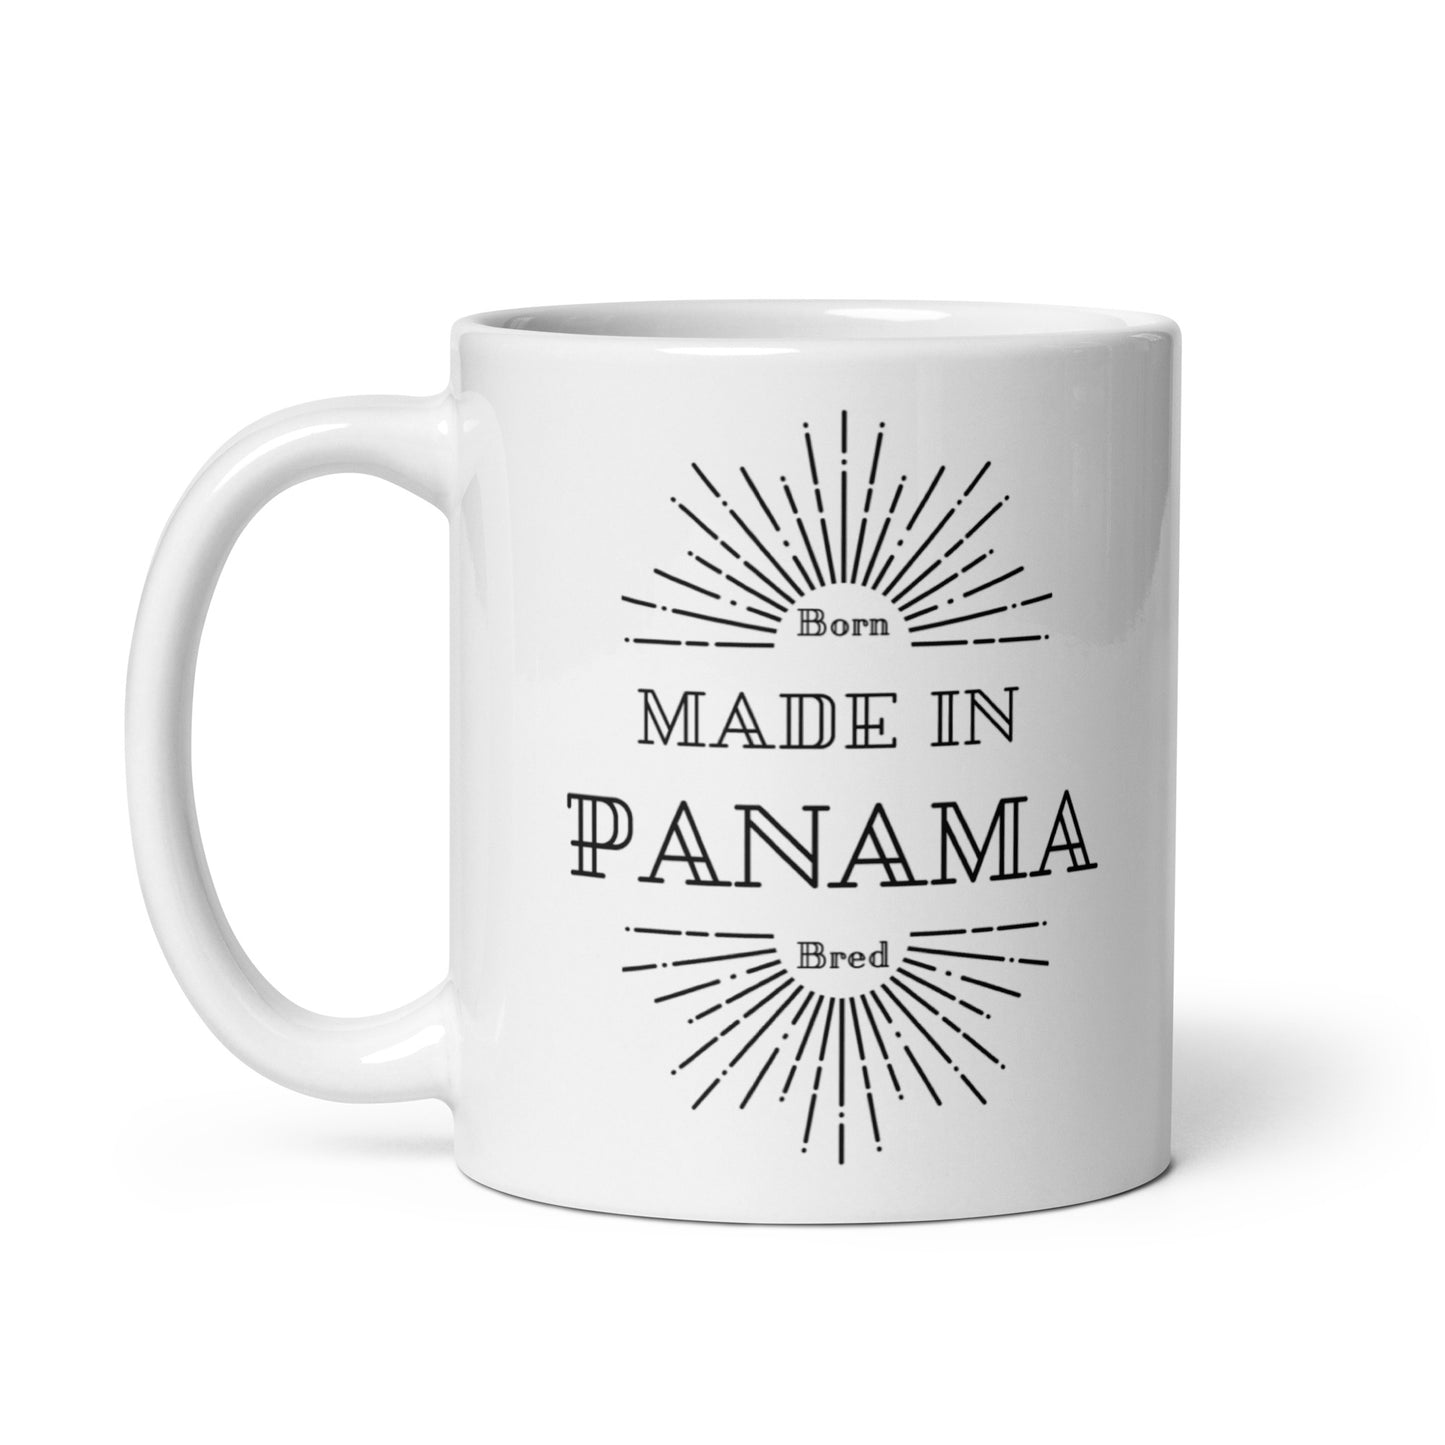 Made in Panama Born and Bred Coffee Mug